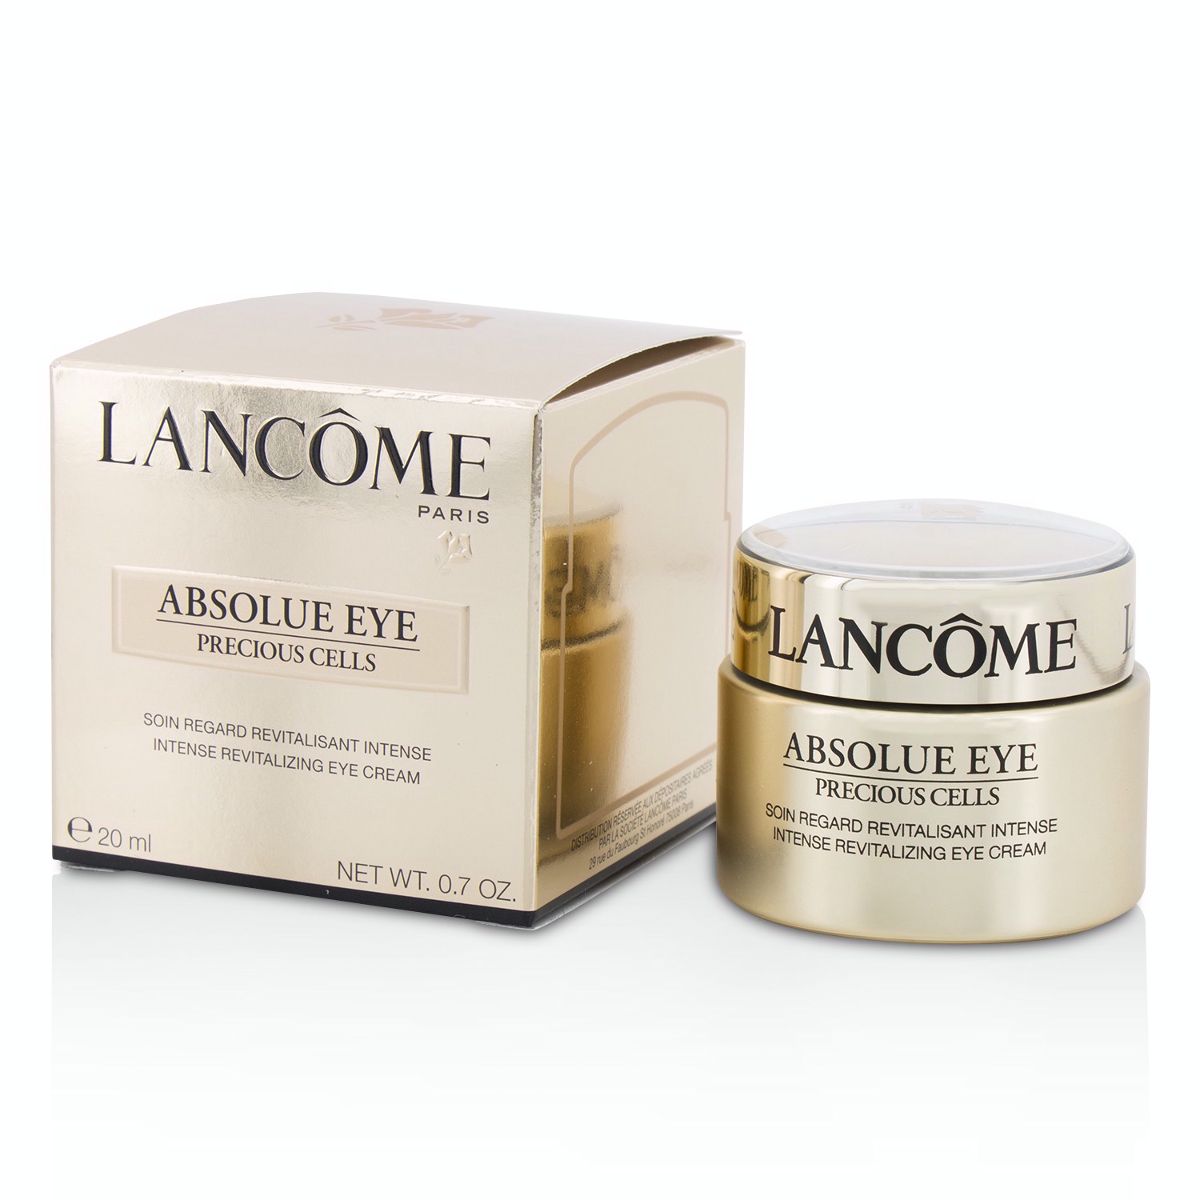 Absolue Eye Precious Cells Intense Revitalizing Eye Cream Lancome Image